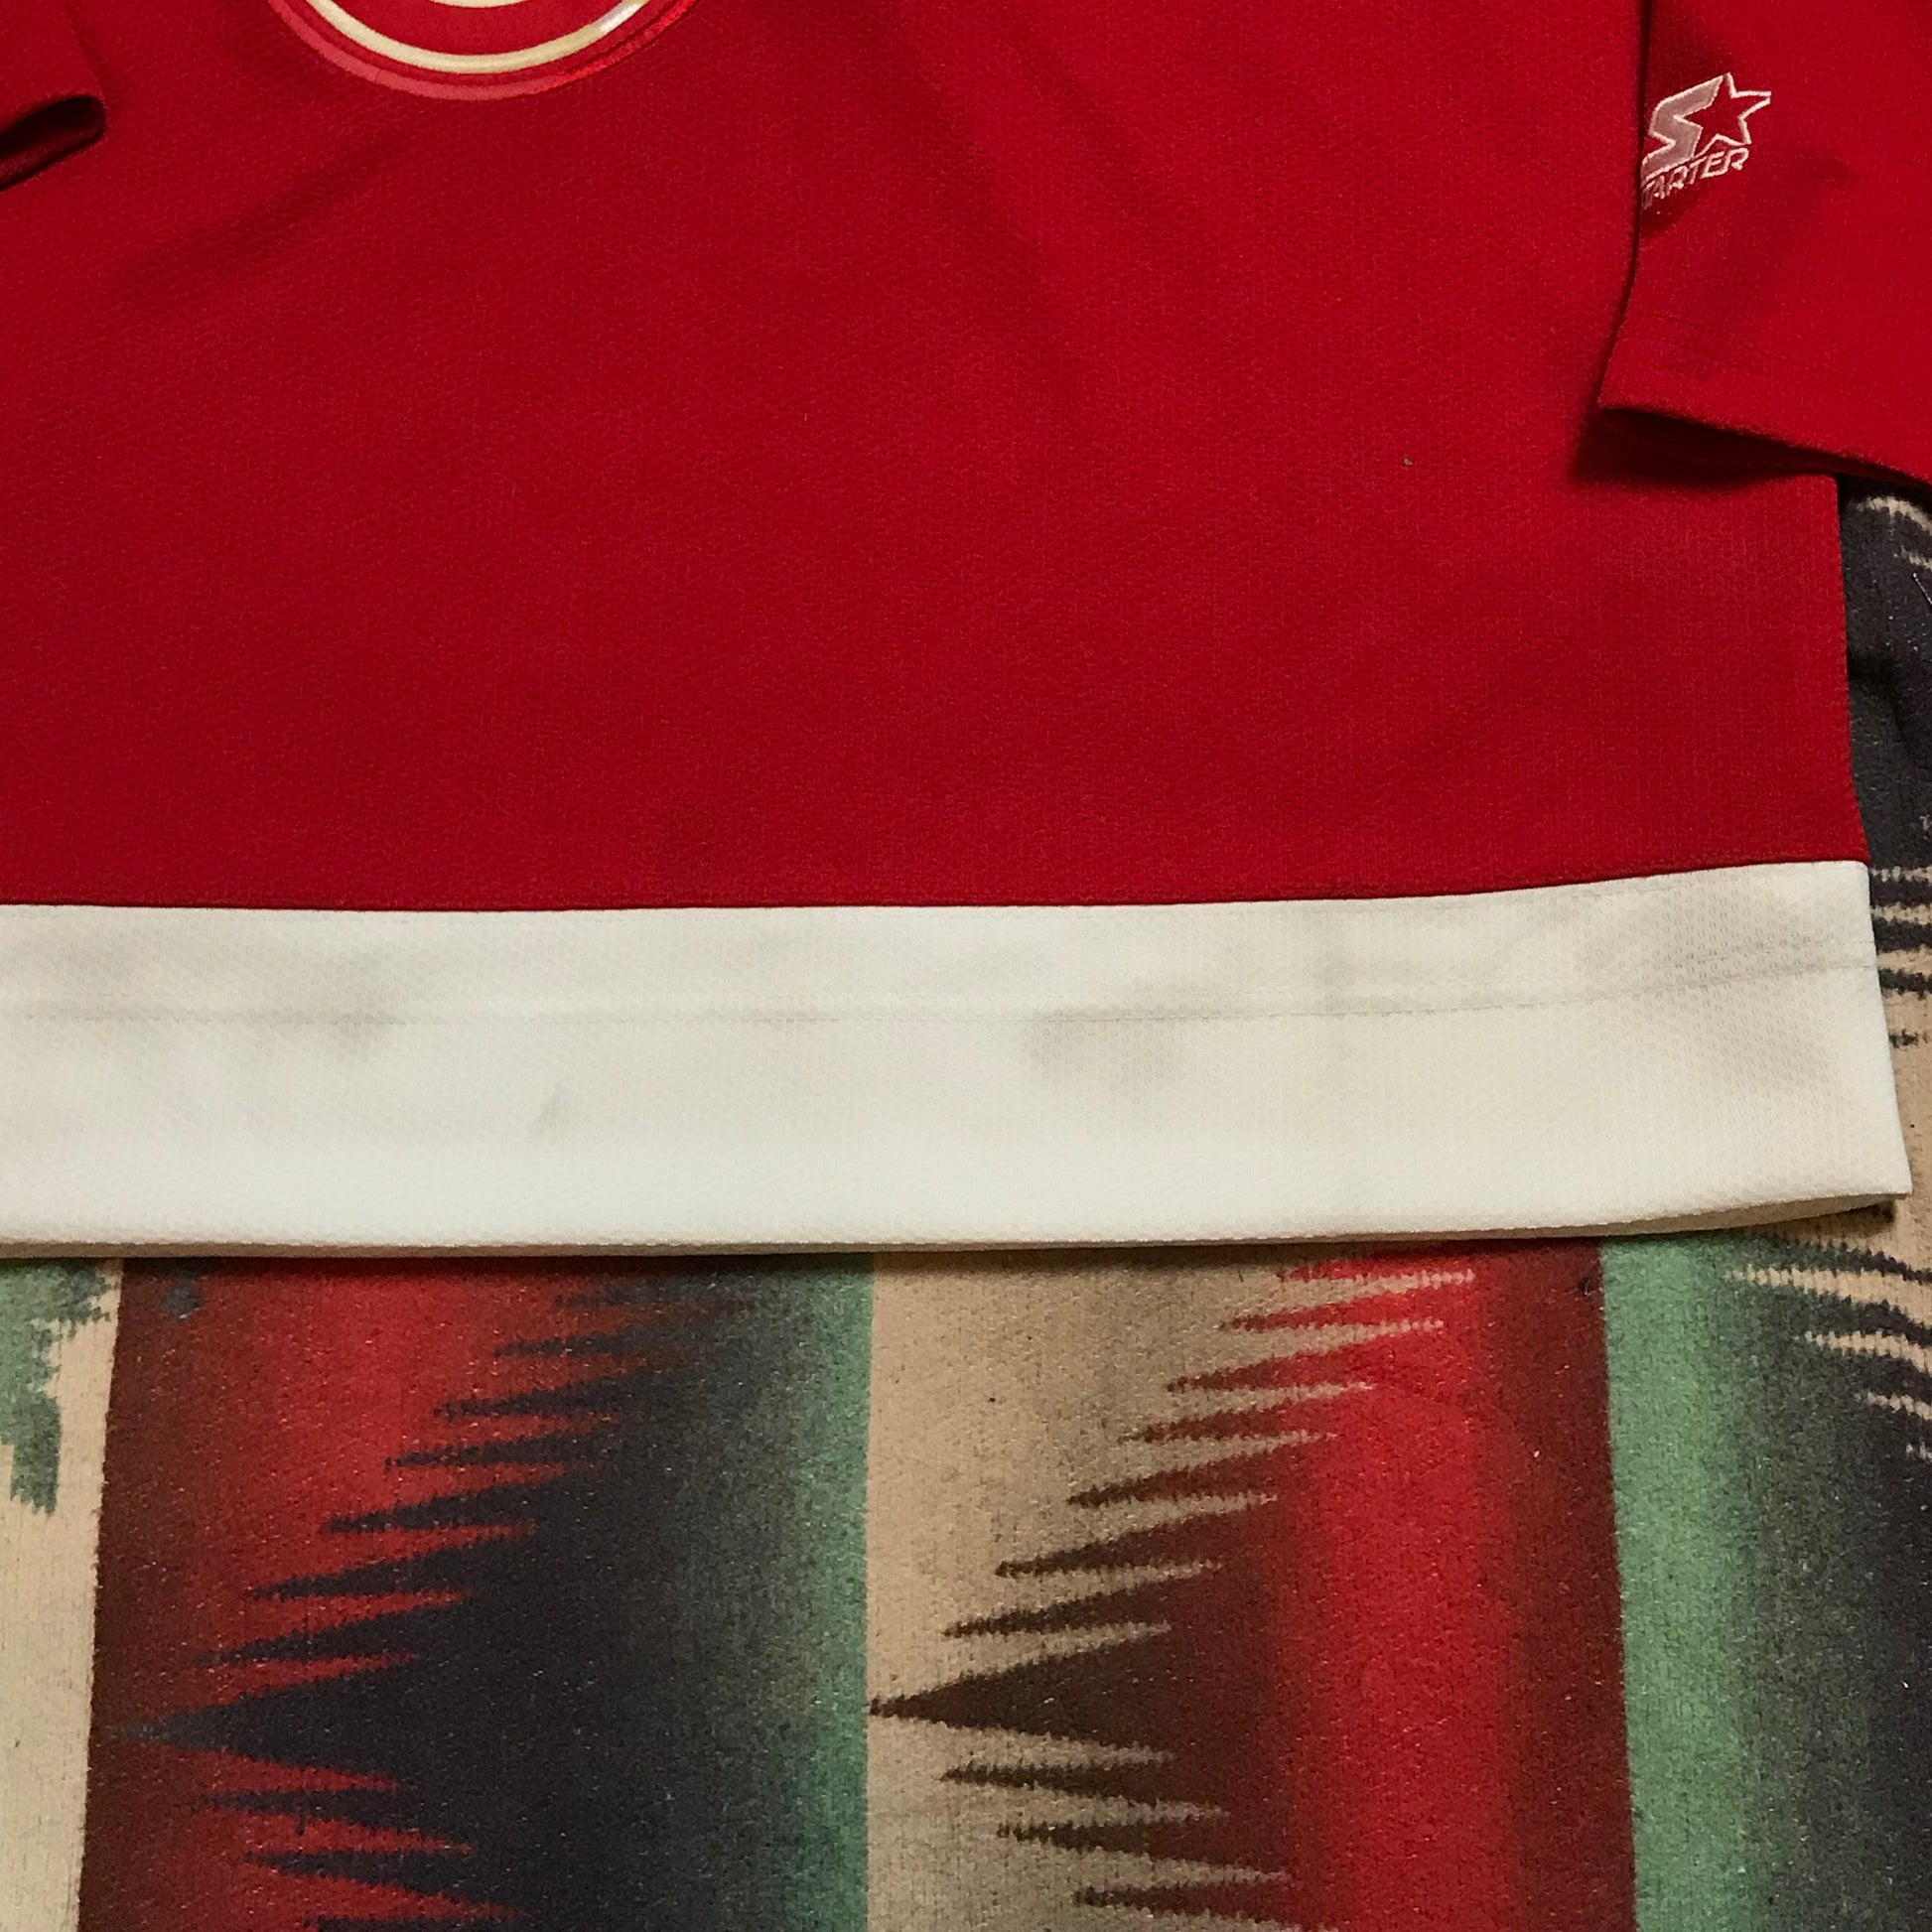 Detroit red wings Starter NHL hockey jersey – blvckbarmitzvah